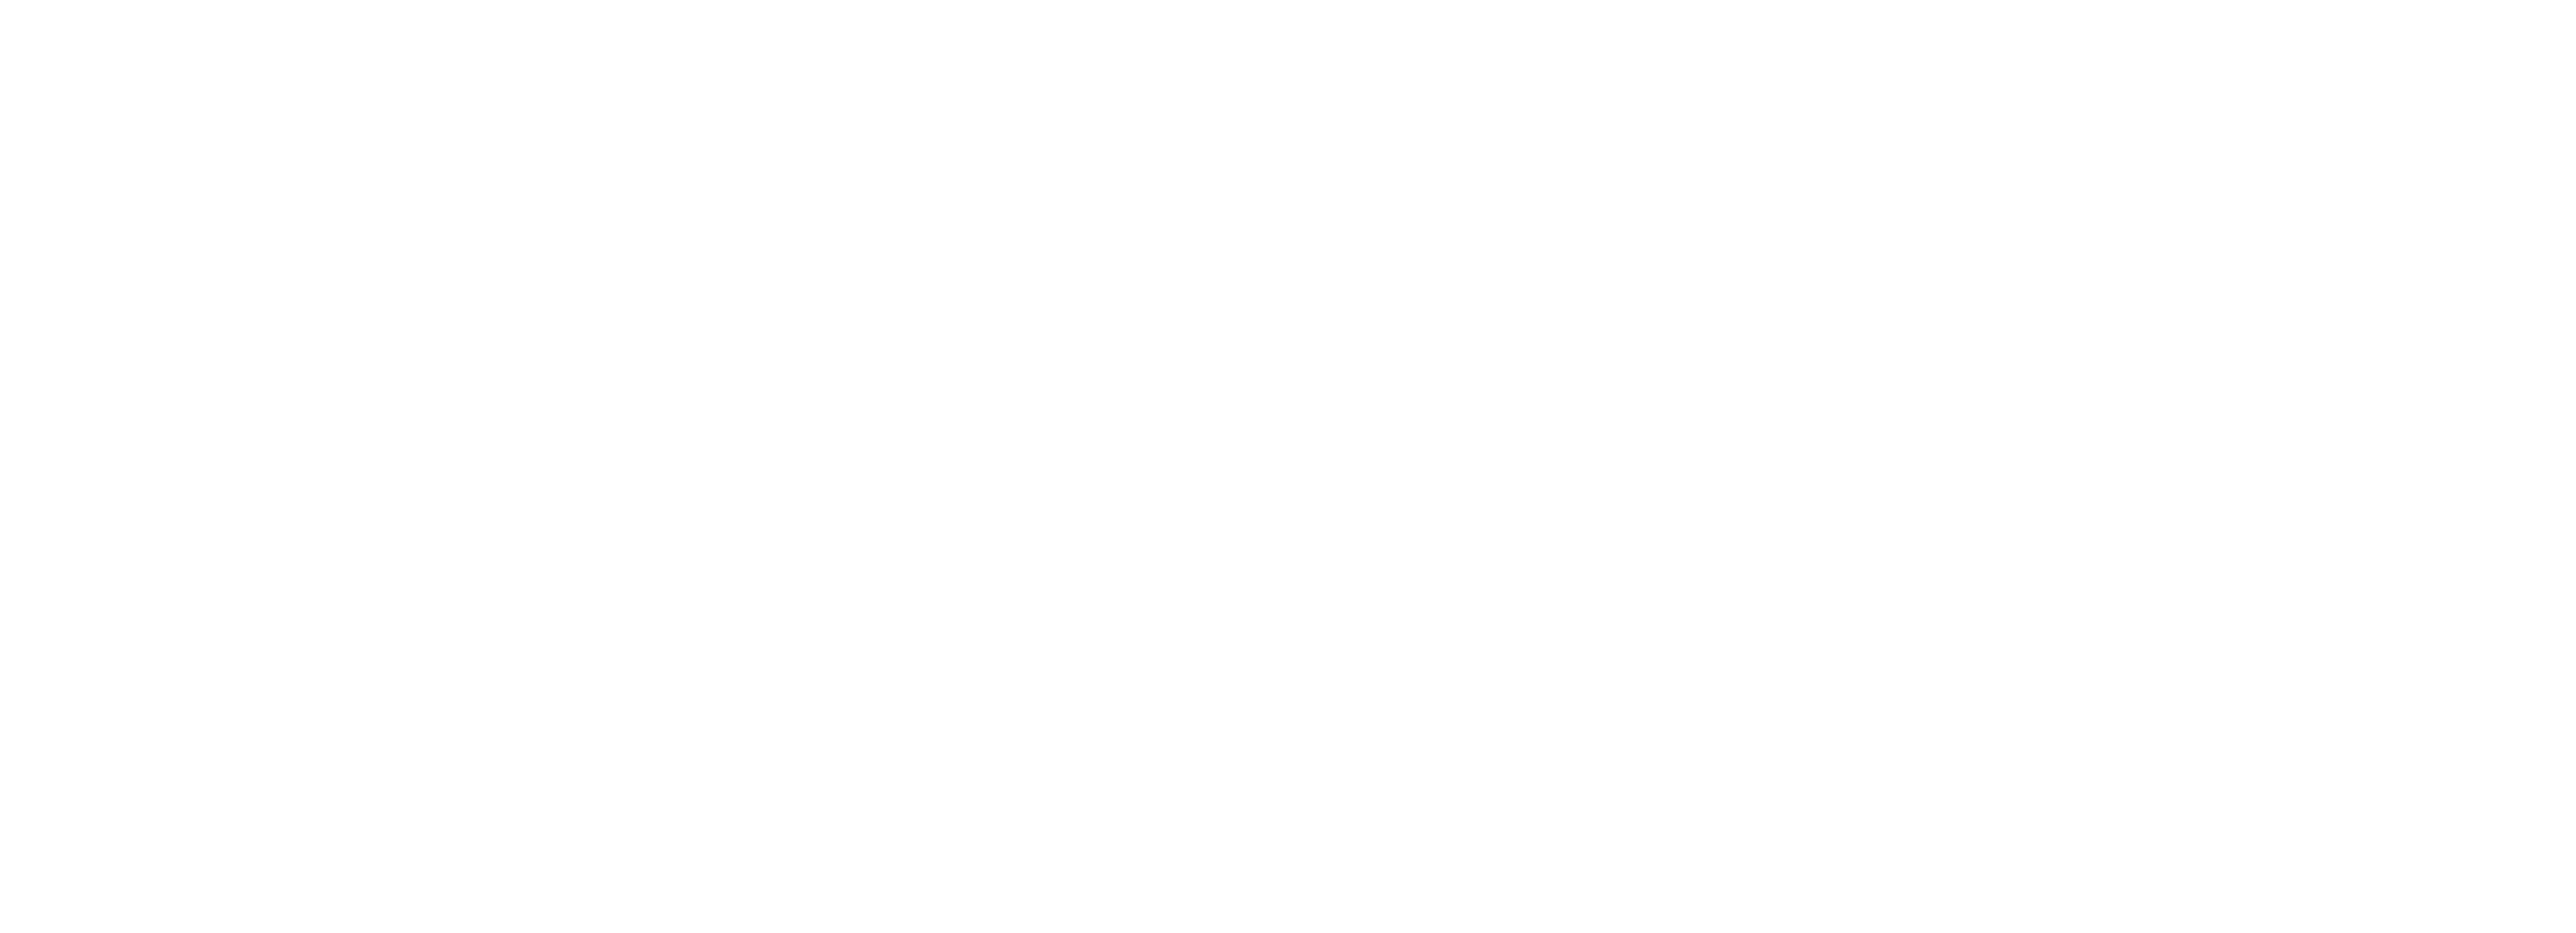 Serproavi